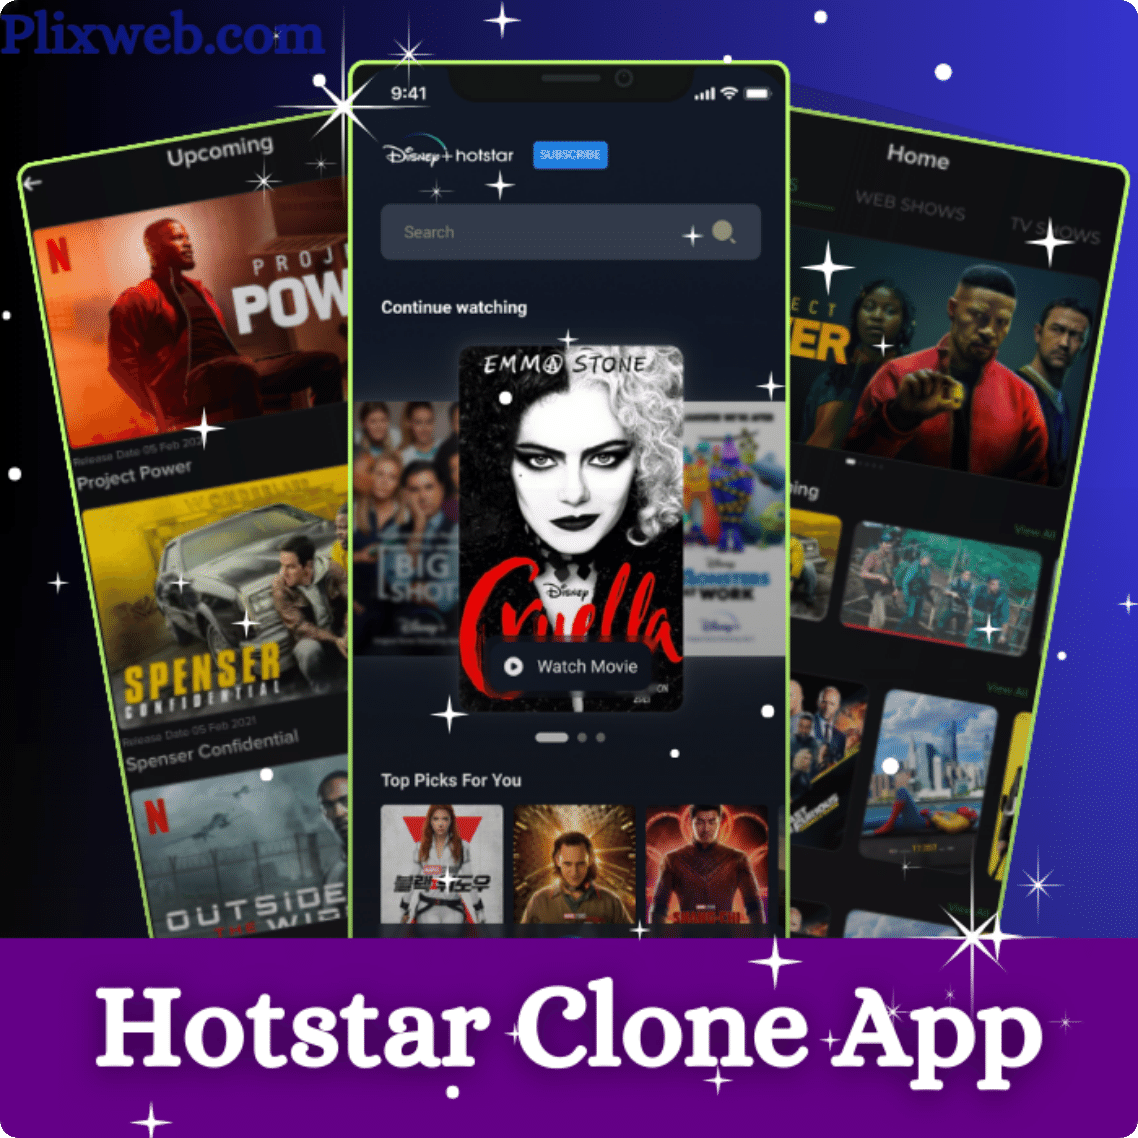 Hotstar Clone App Development